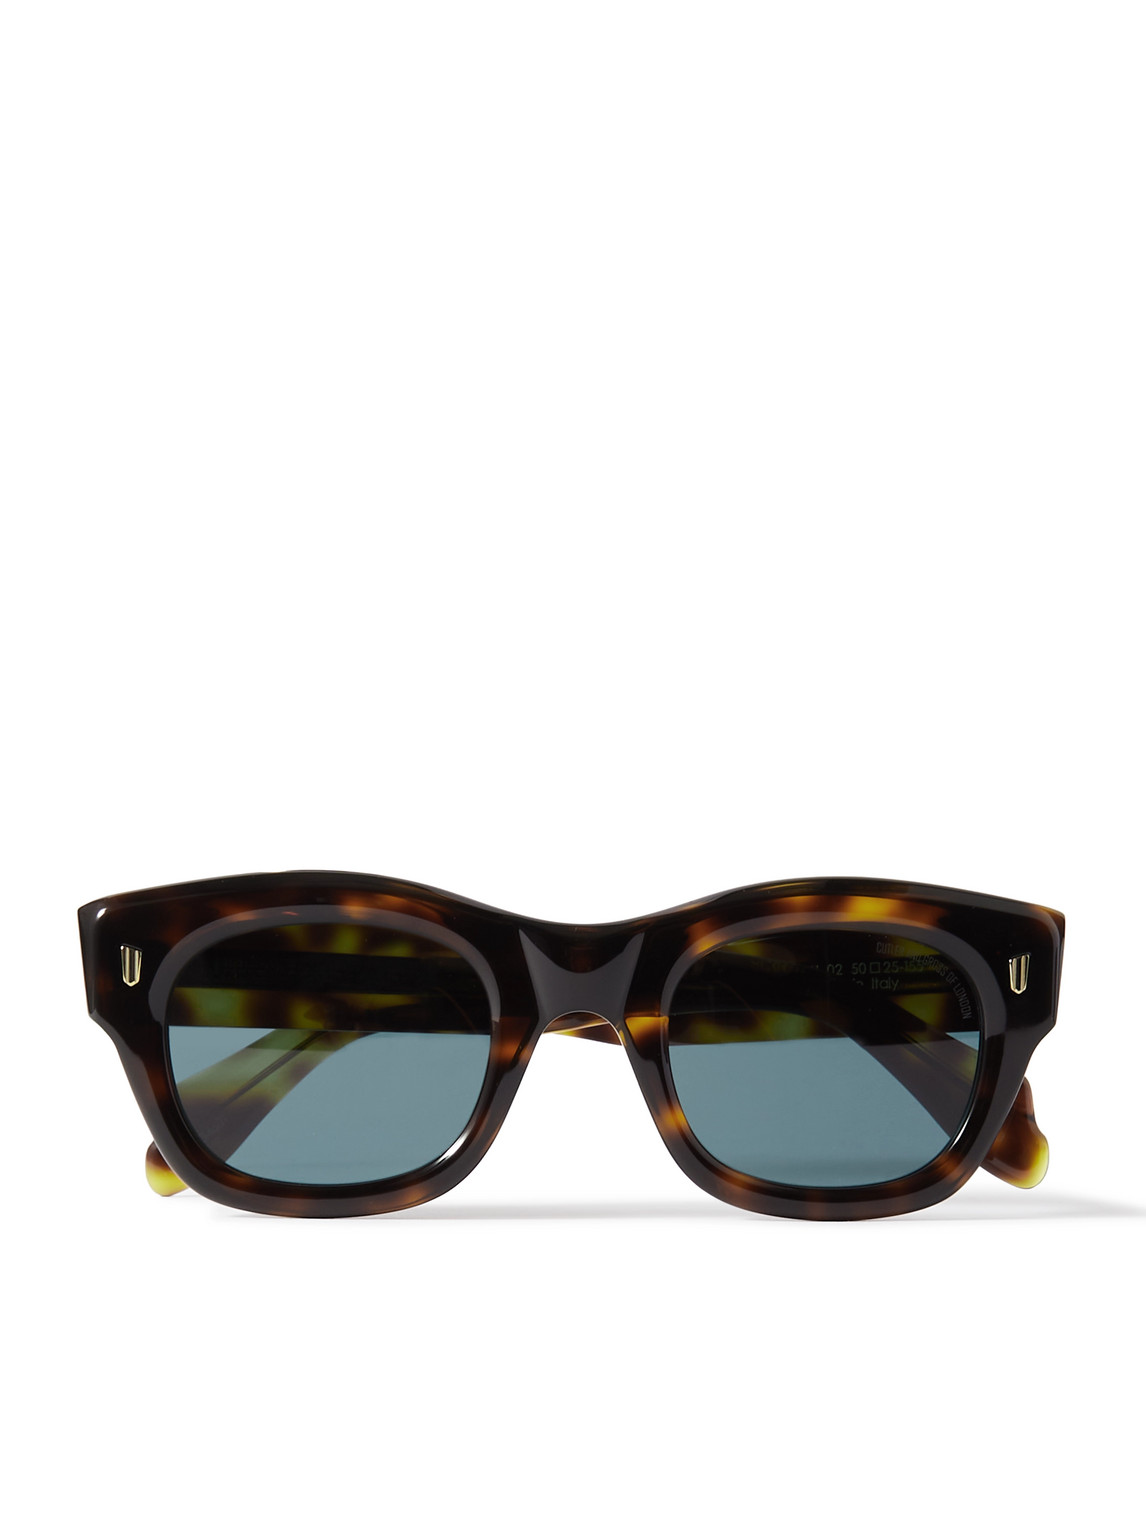 Cutler And Gross 9261 Cat-eye Tortoiseshell Acetate Sunglasses In Brown